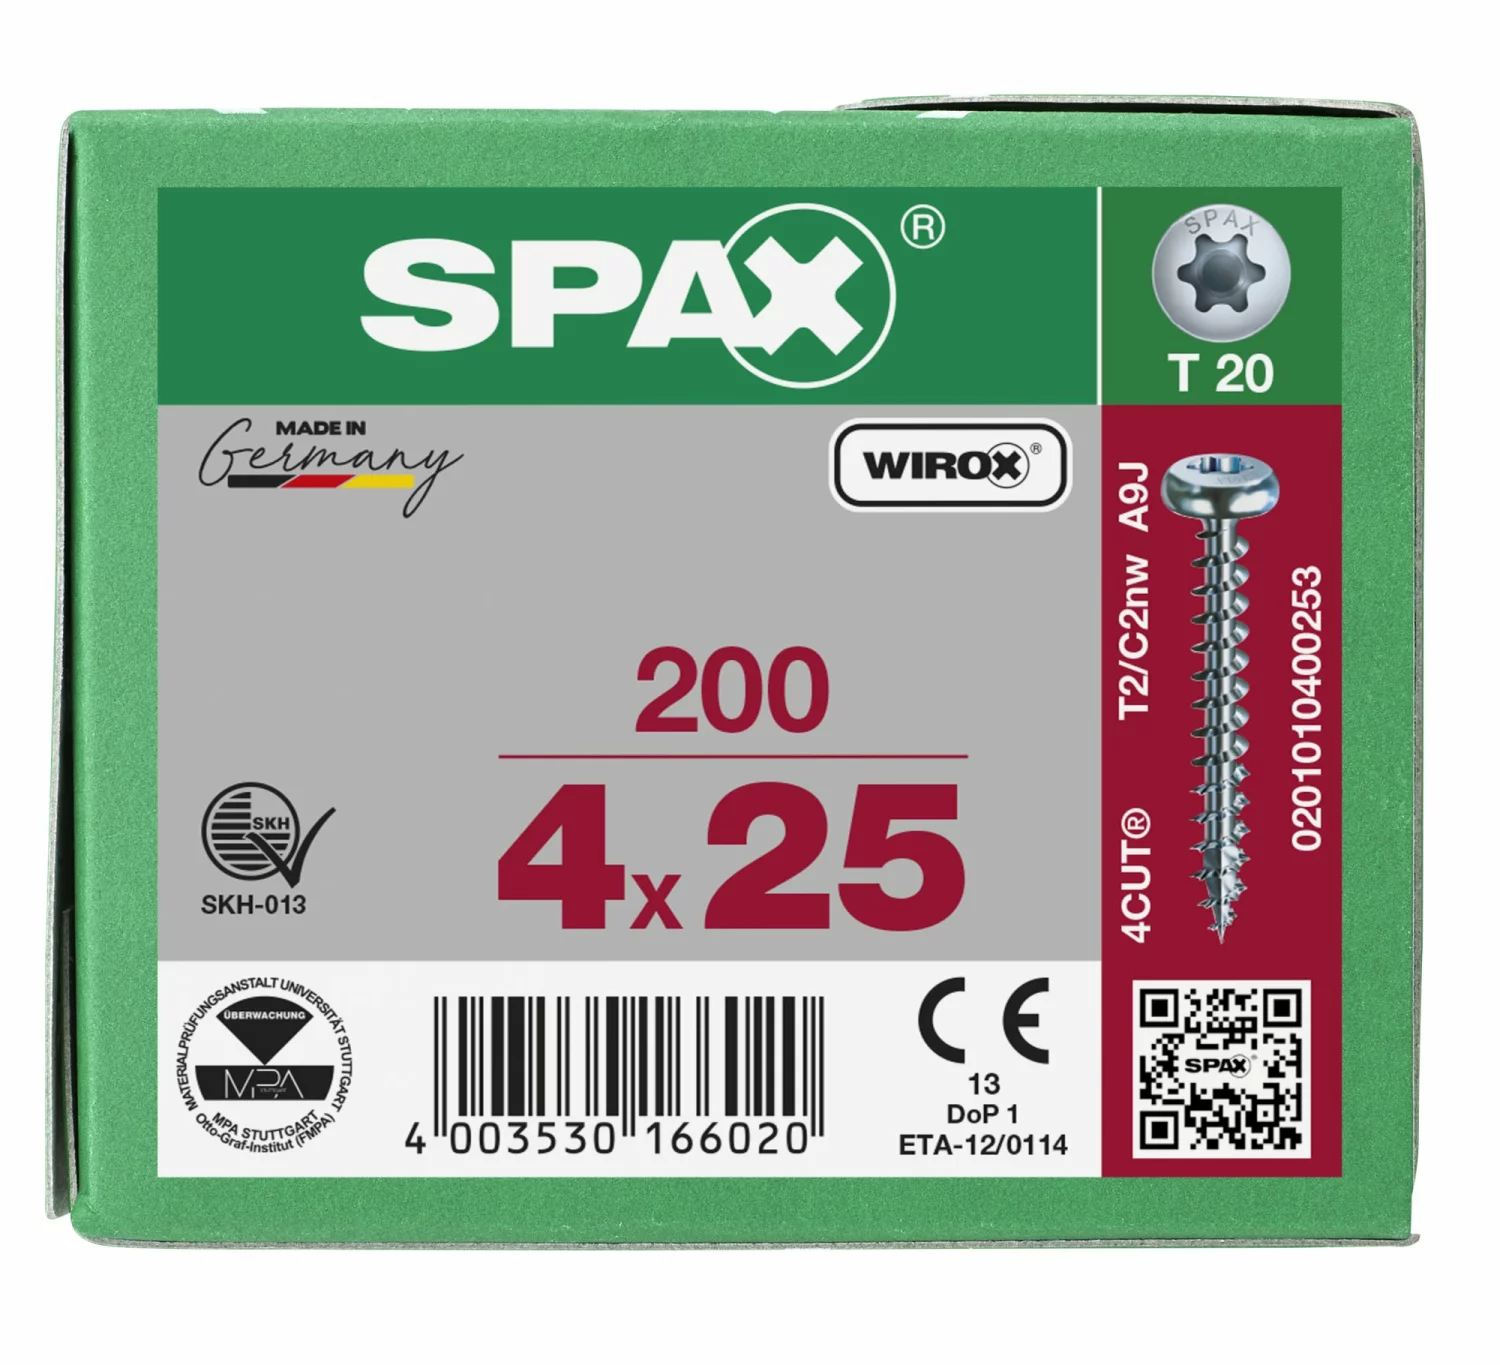 SPAX 201010400253 Universele schroef, Bolkop, 4 x 25, Voldraad, T-STAR plus TX20 - WIROX - 200 stuks